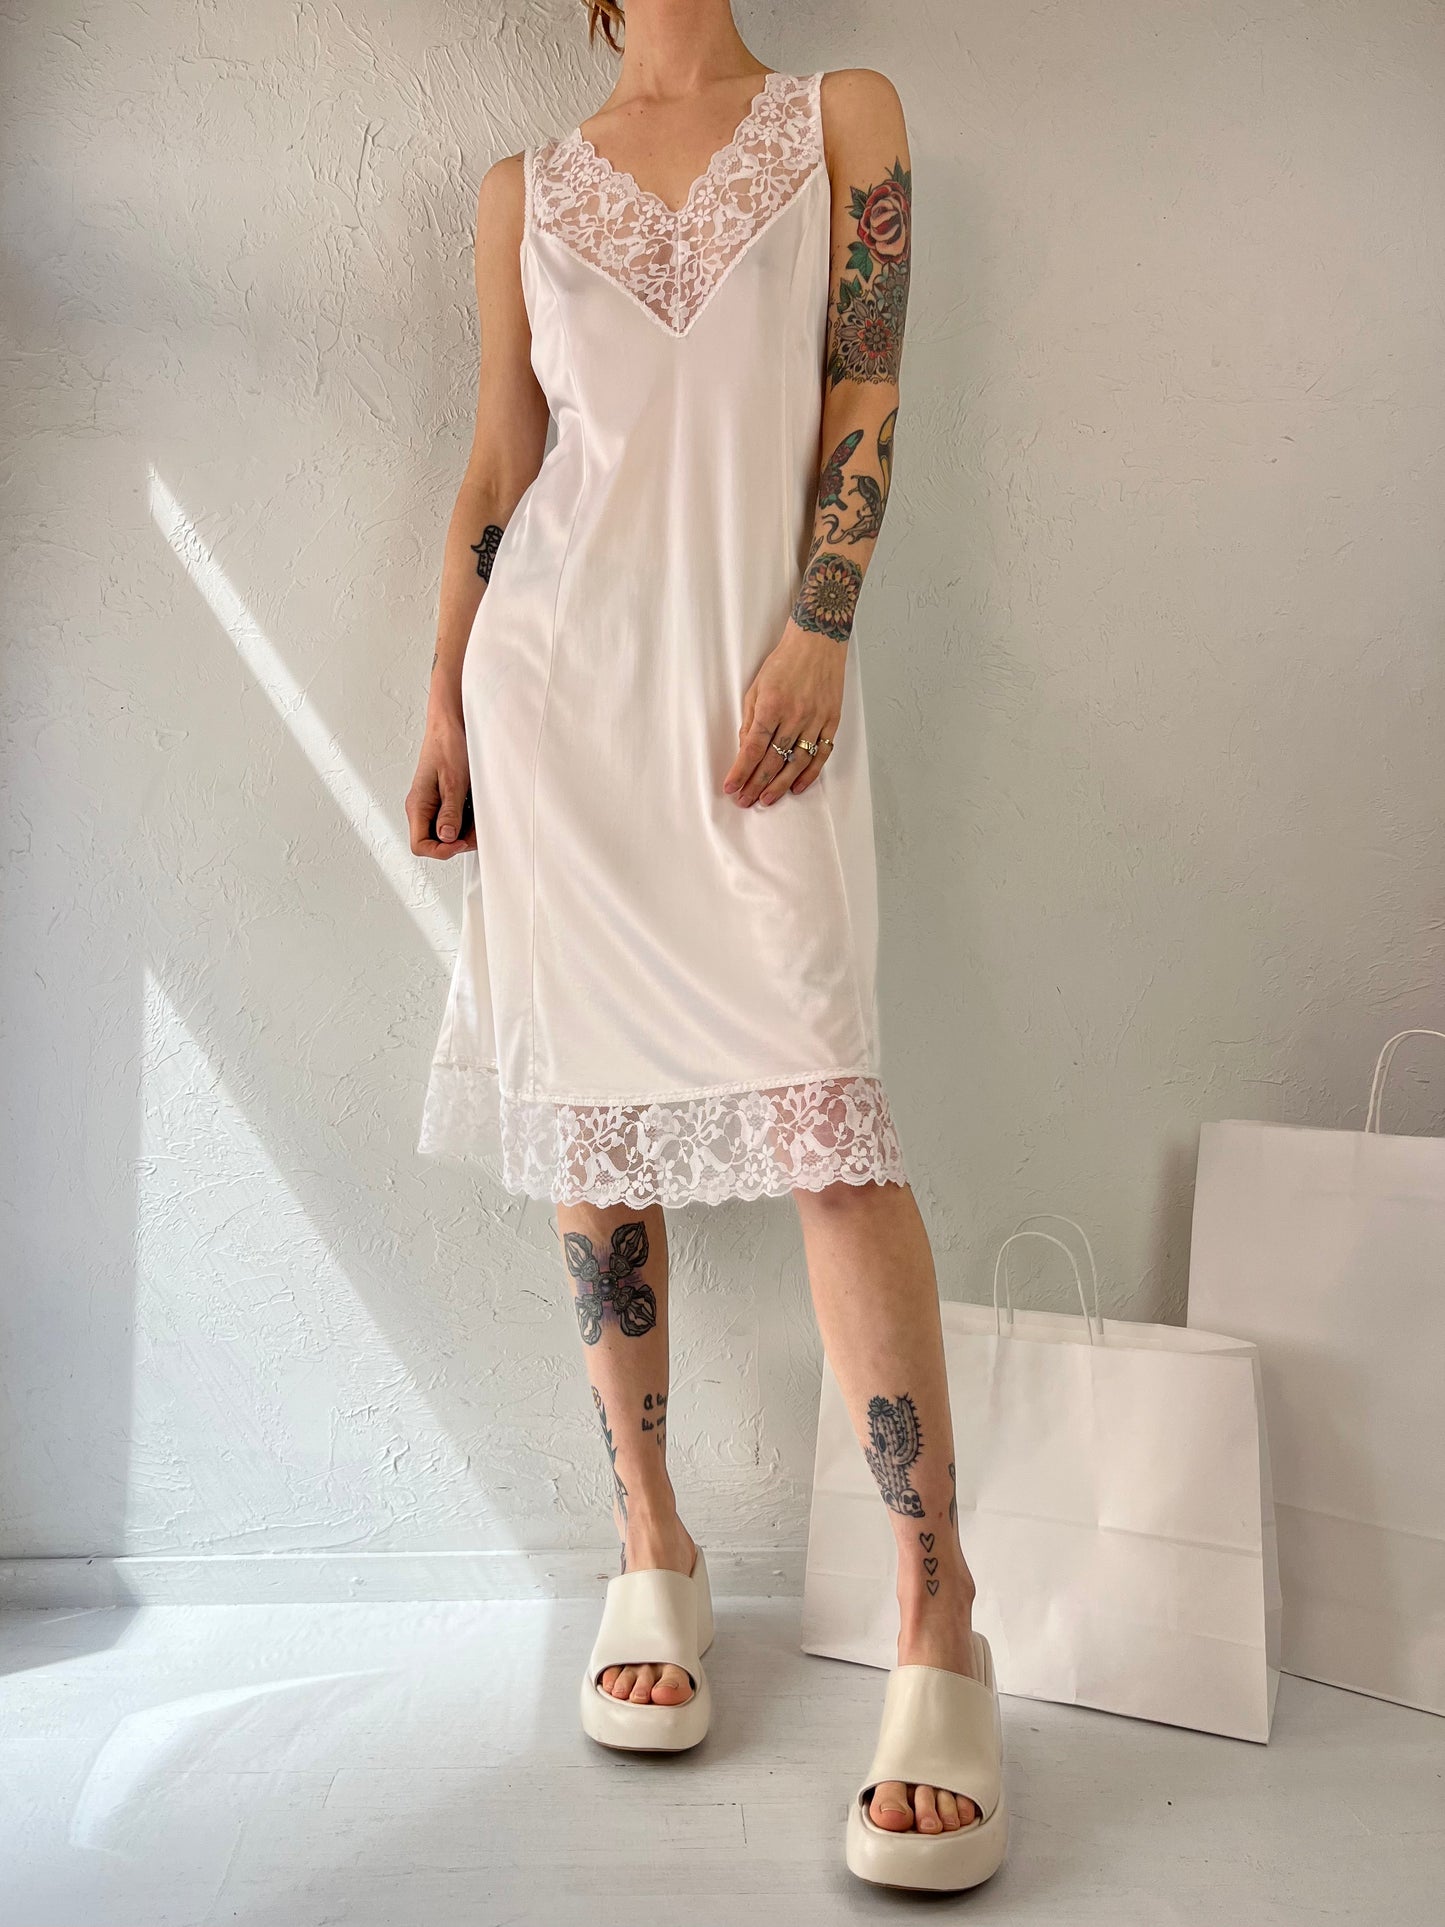 80s 'Mode Avon' White Lacey Nylon Slip Dress / Medium